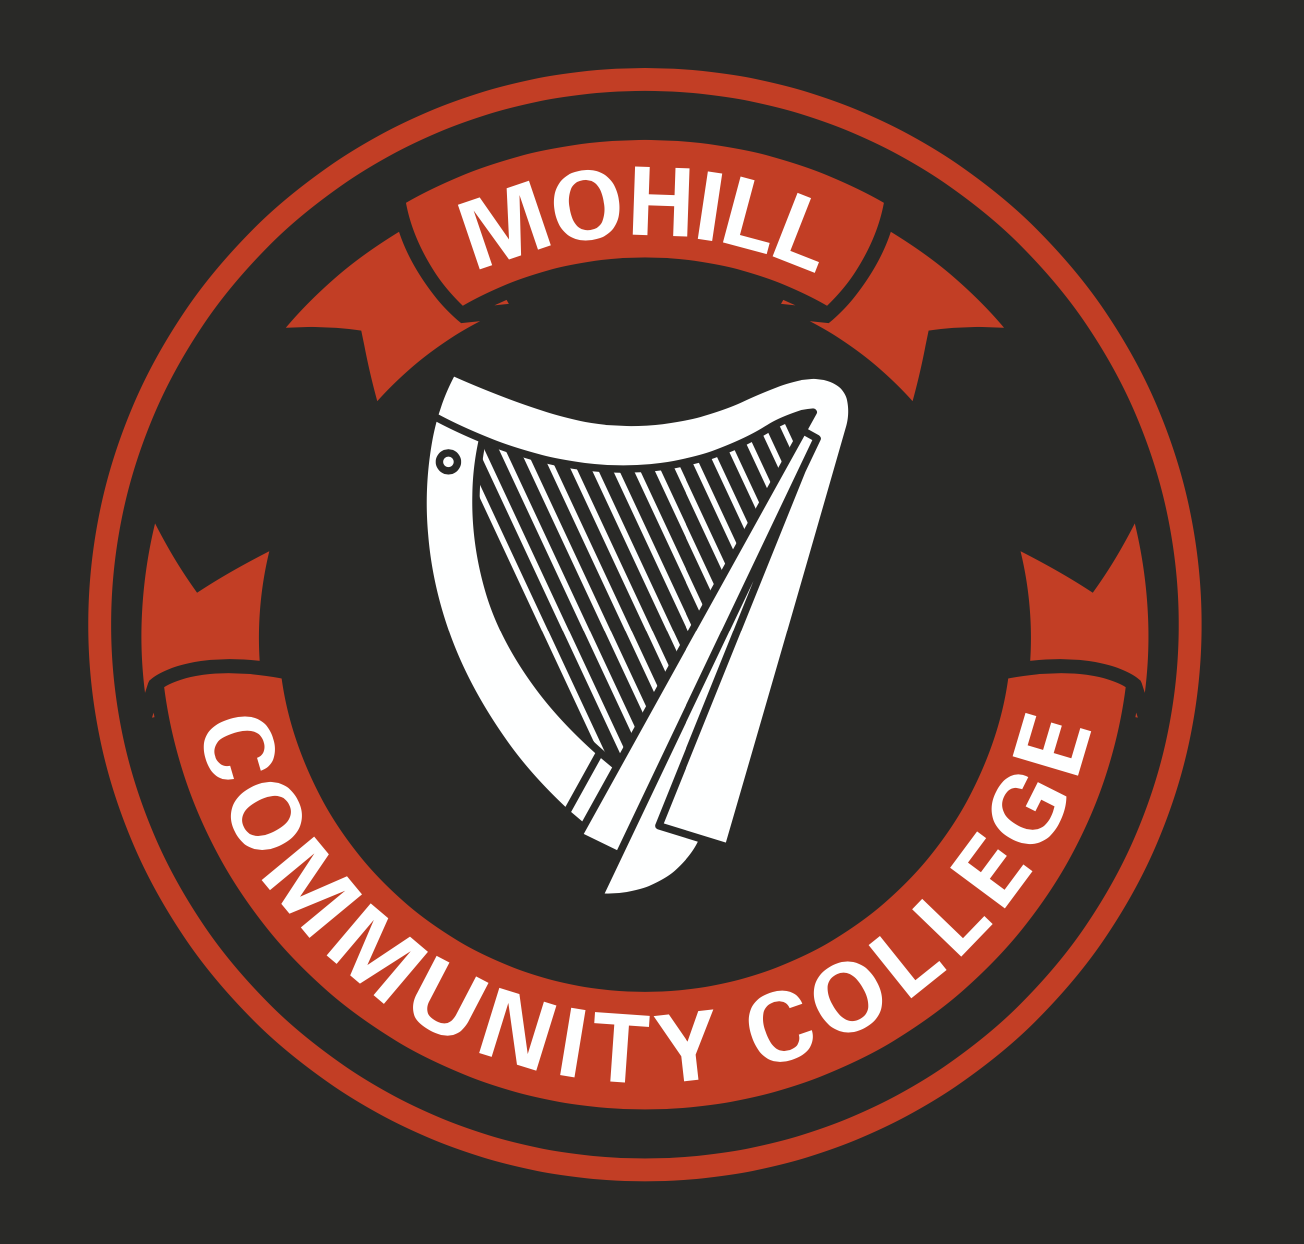 Mohill Community College Crest new